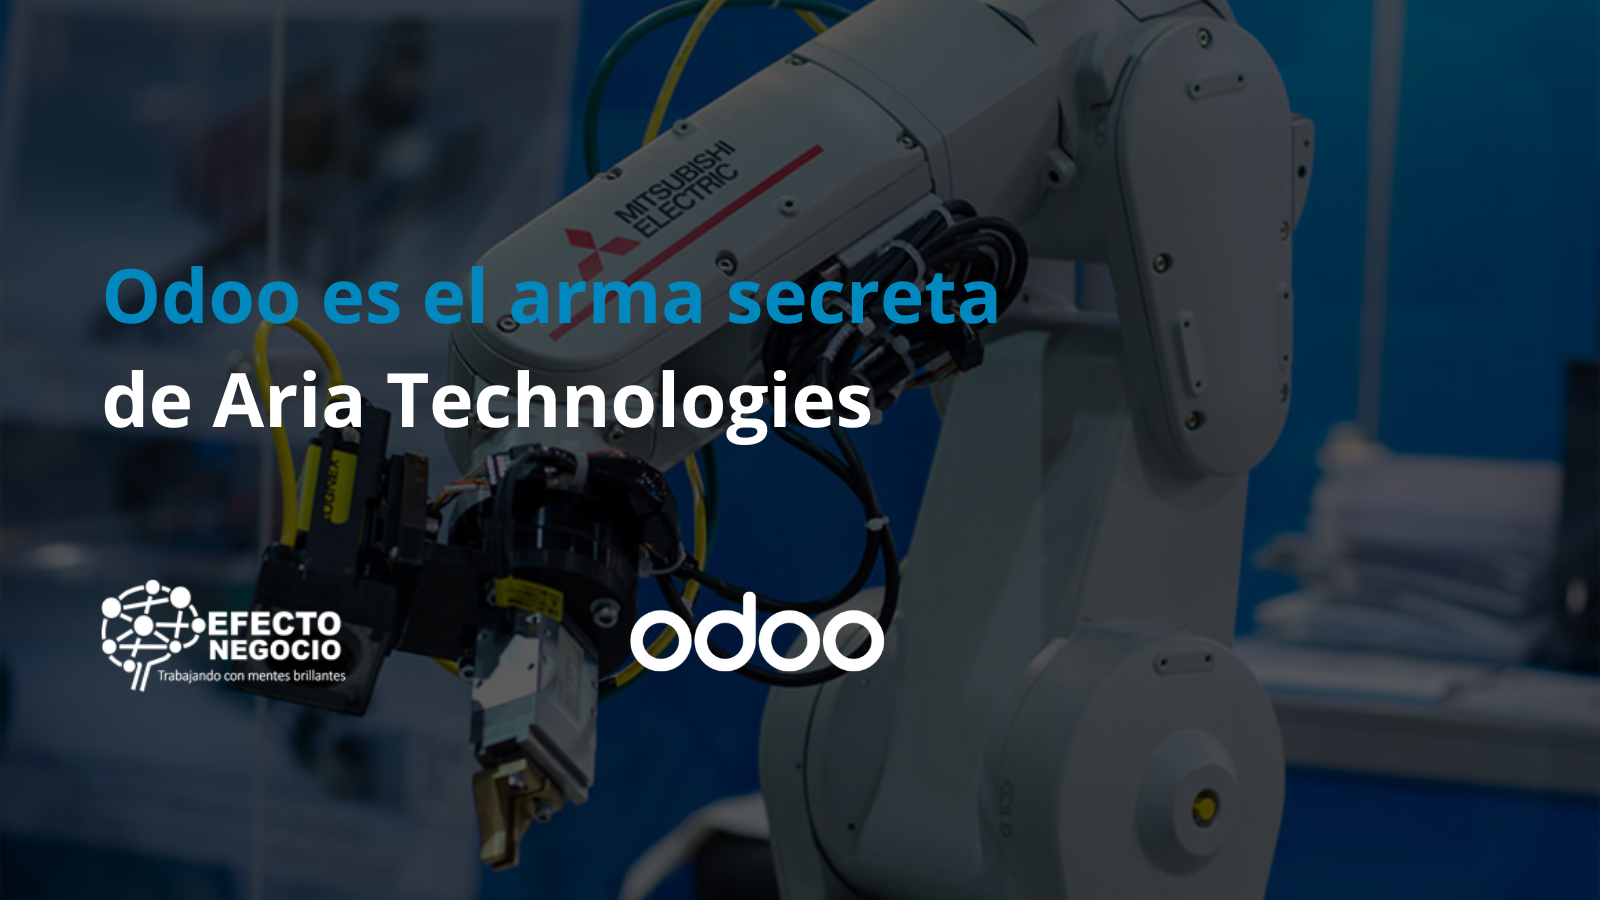 Odoo es el arma secreta de Aria Technologies